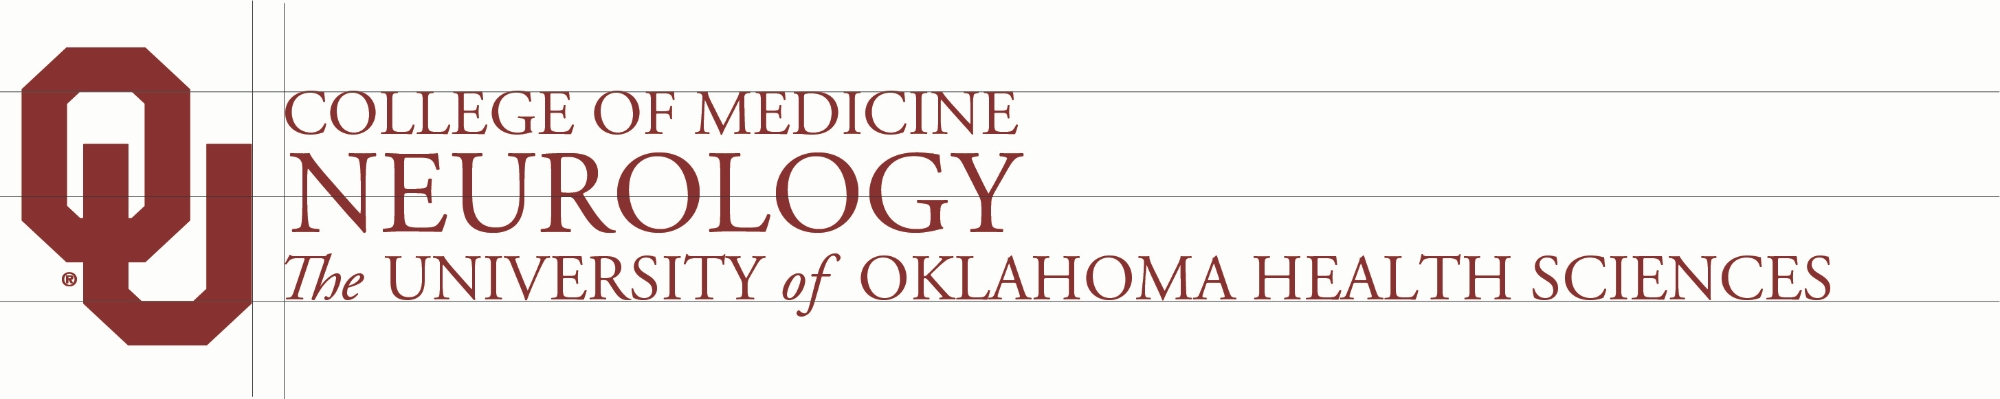 Interlocking OU, College of Medicine, Department of Medicine, The University of Oklahoma Health Sciences wordmark, three-line example.